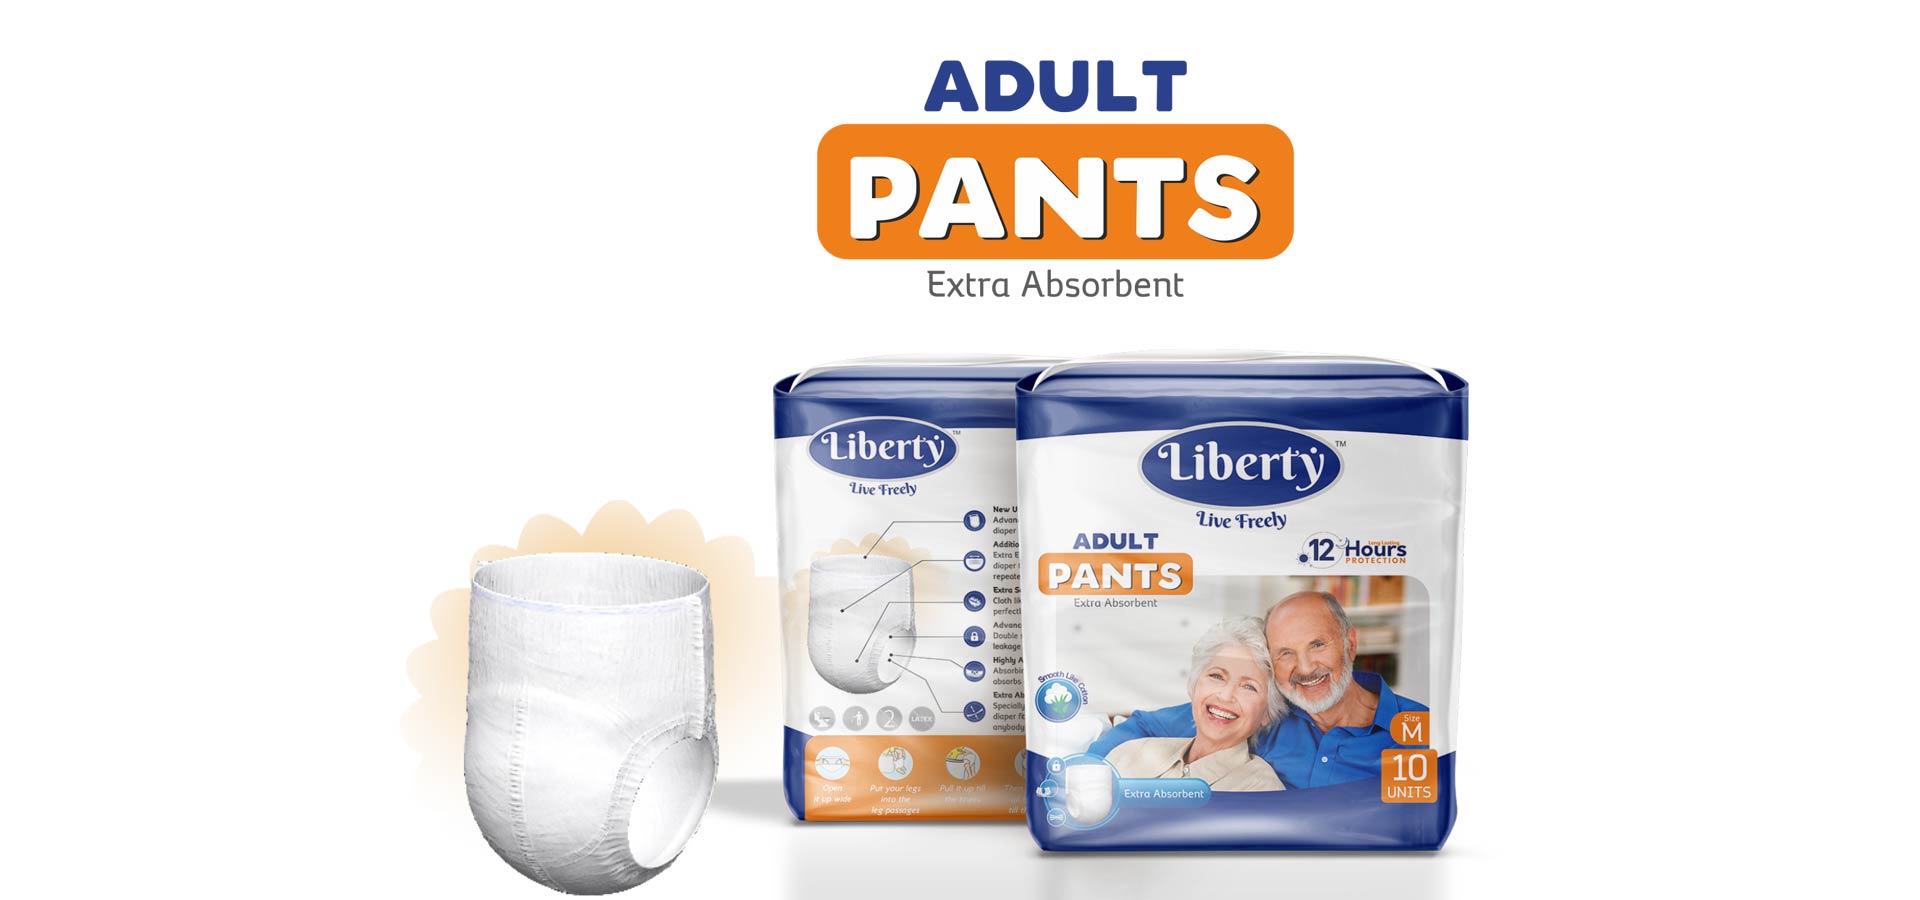 Liberty Adult Pants | Liberty Adult Diapers